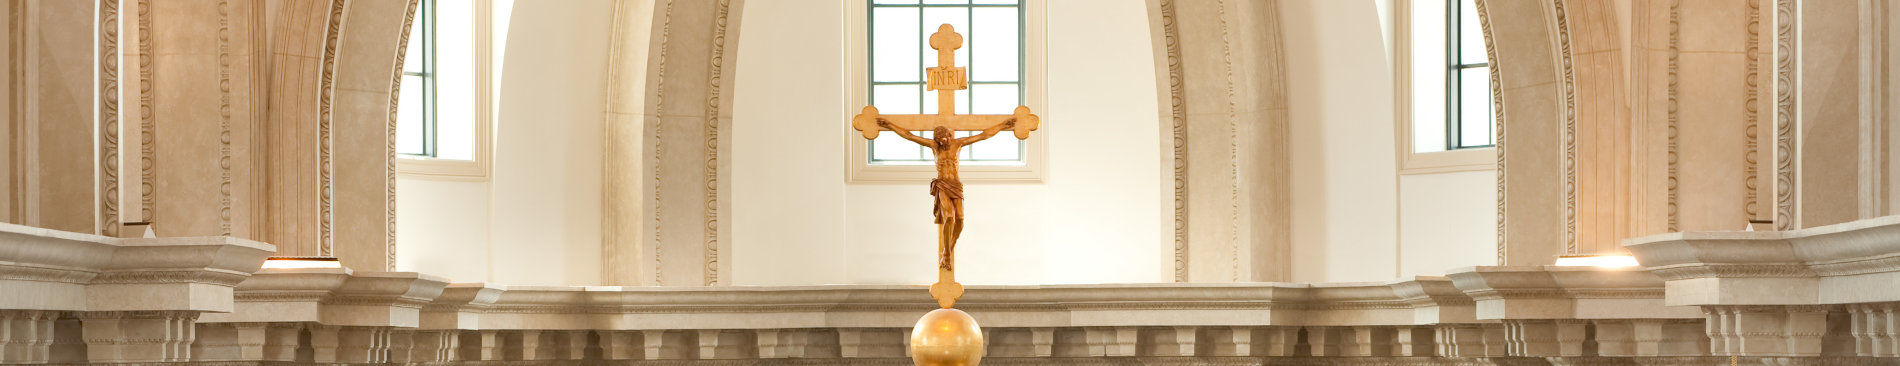 Chapel crucifix